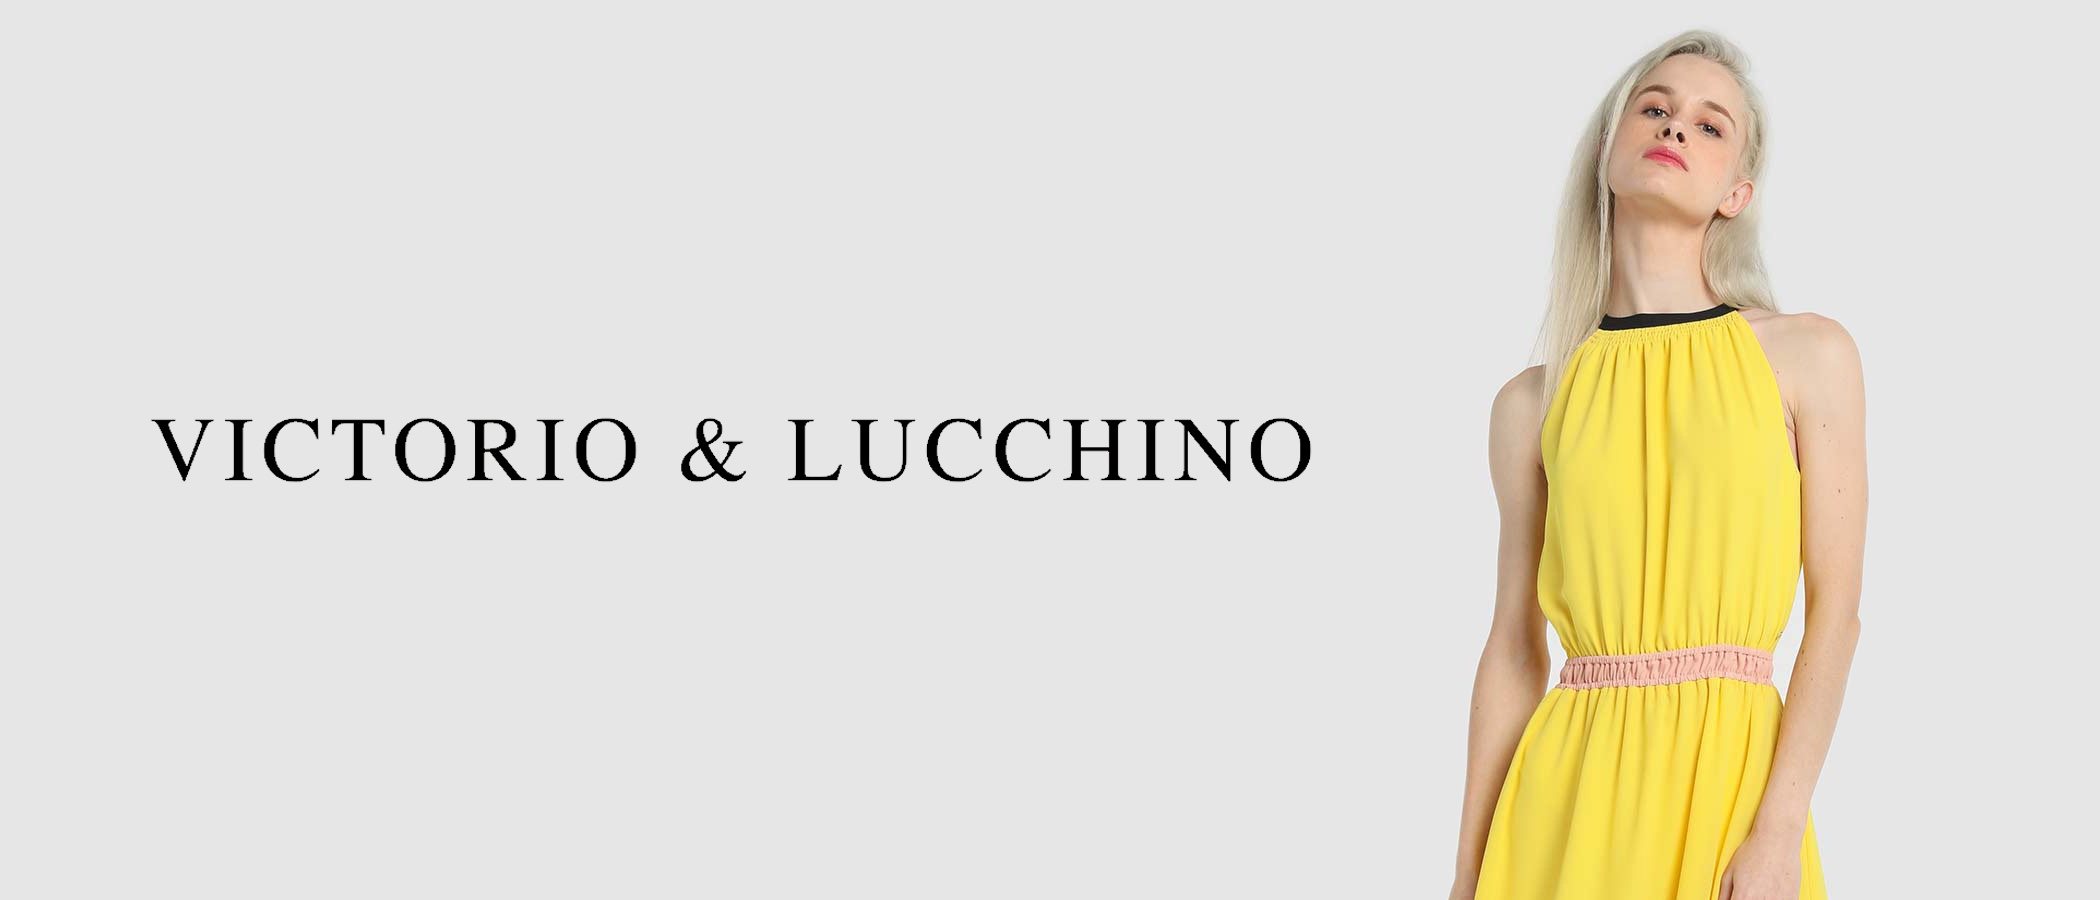 Victorio & Lucchino se suman a la tendencia del amarillo para esta primavera/verano